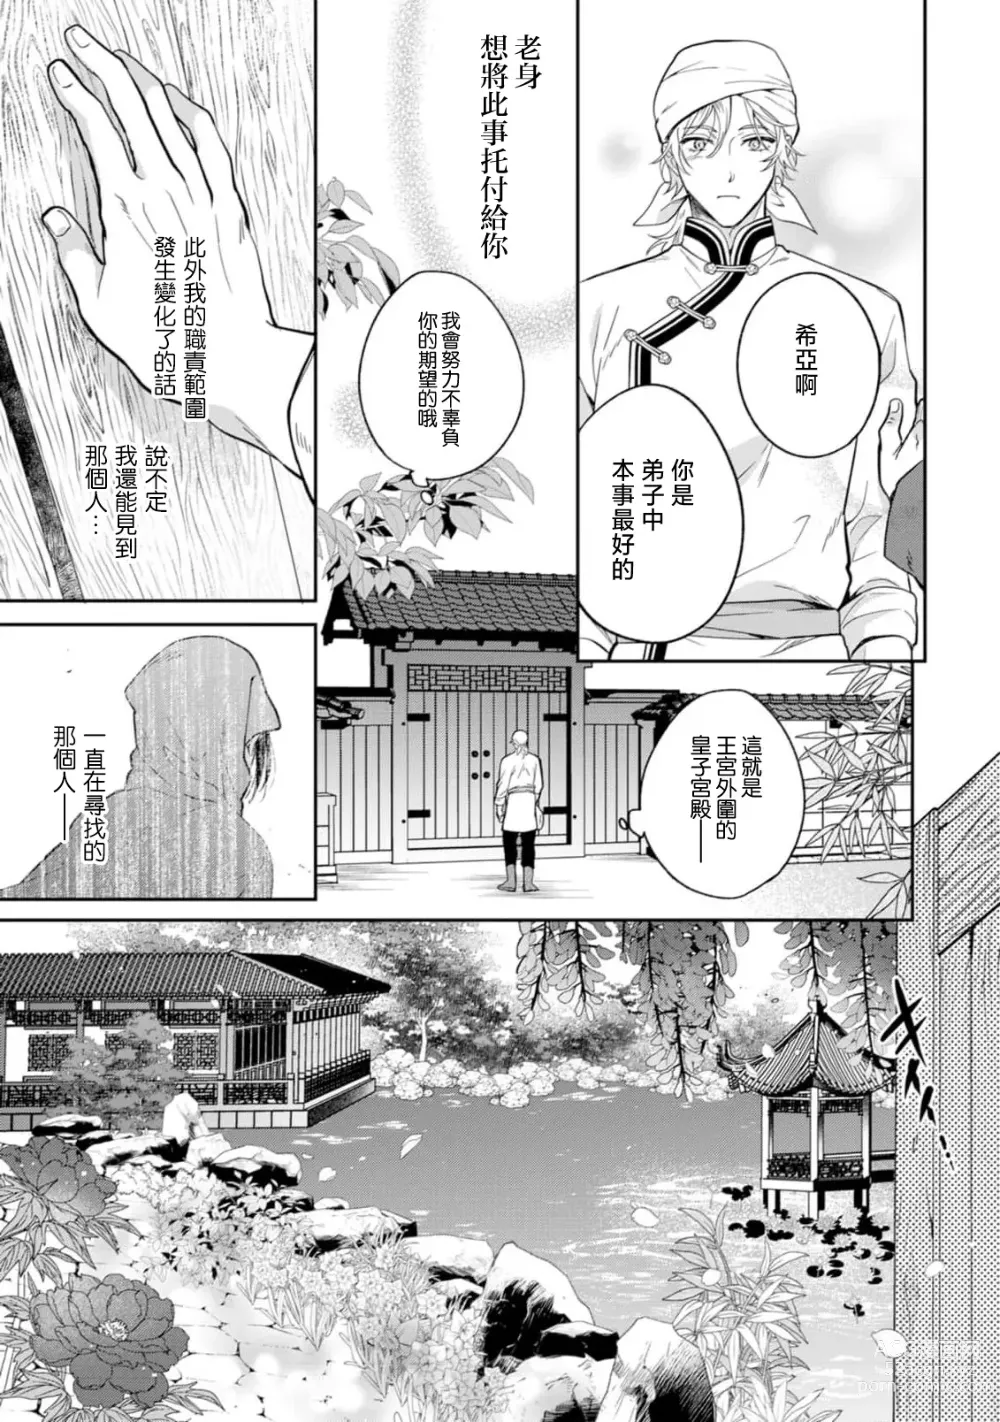 Page 7 of manga 伪装起来的Ω与庭院秘事 1